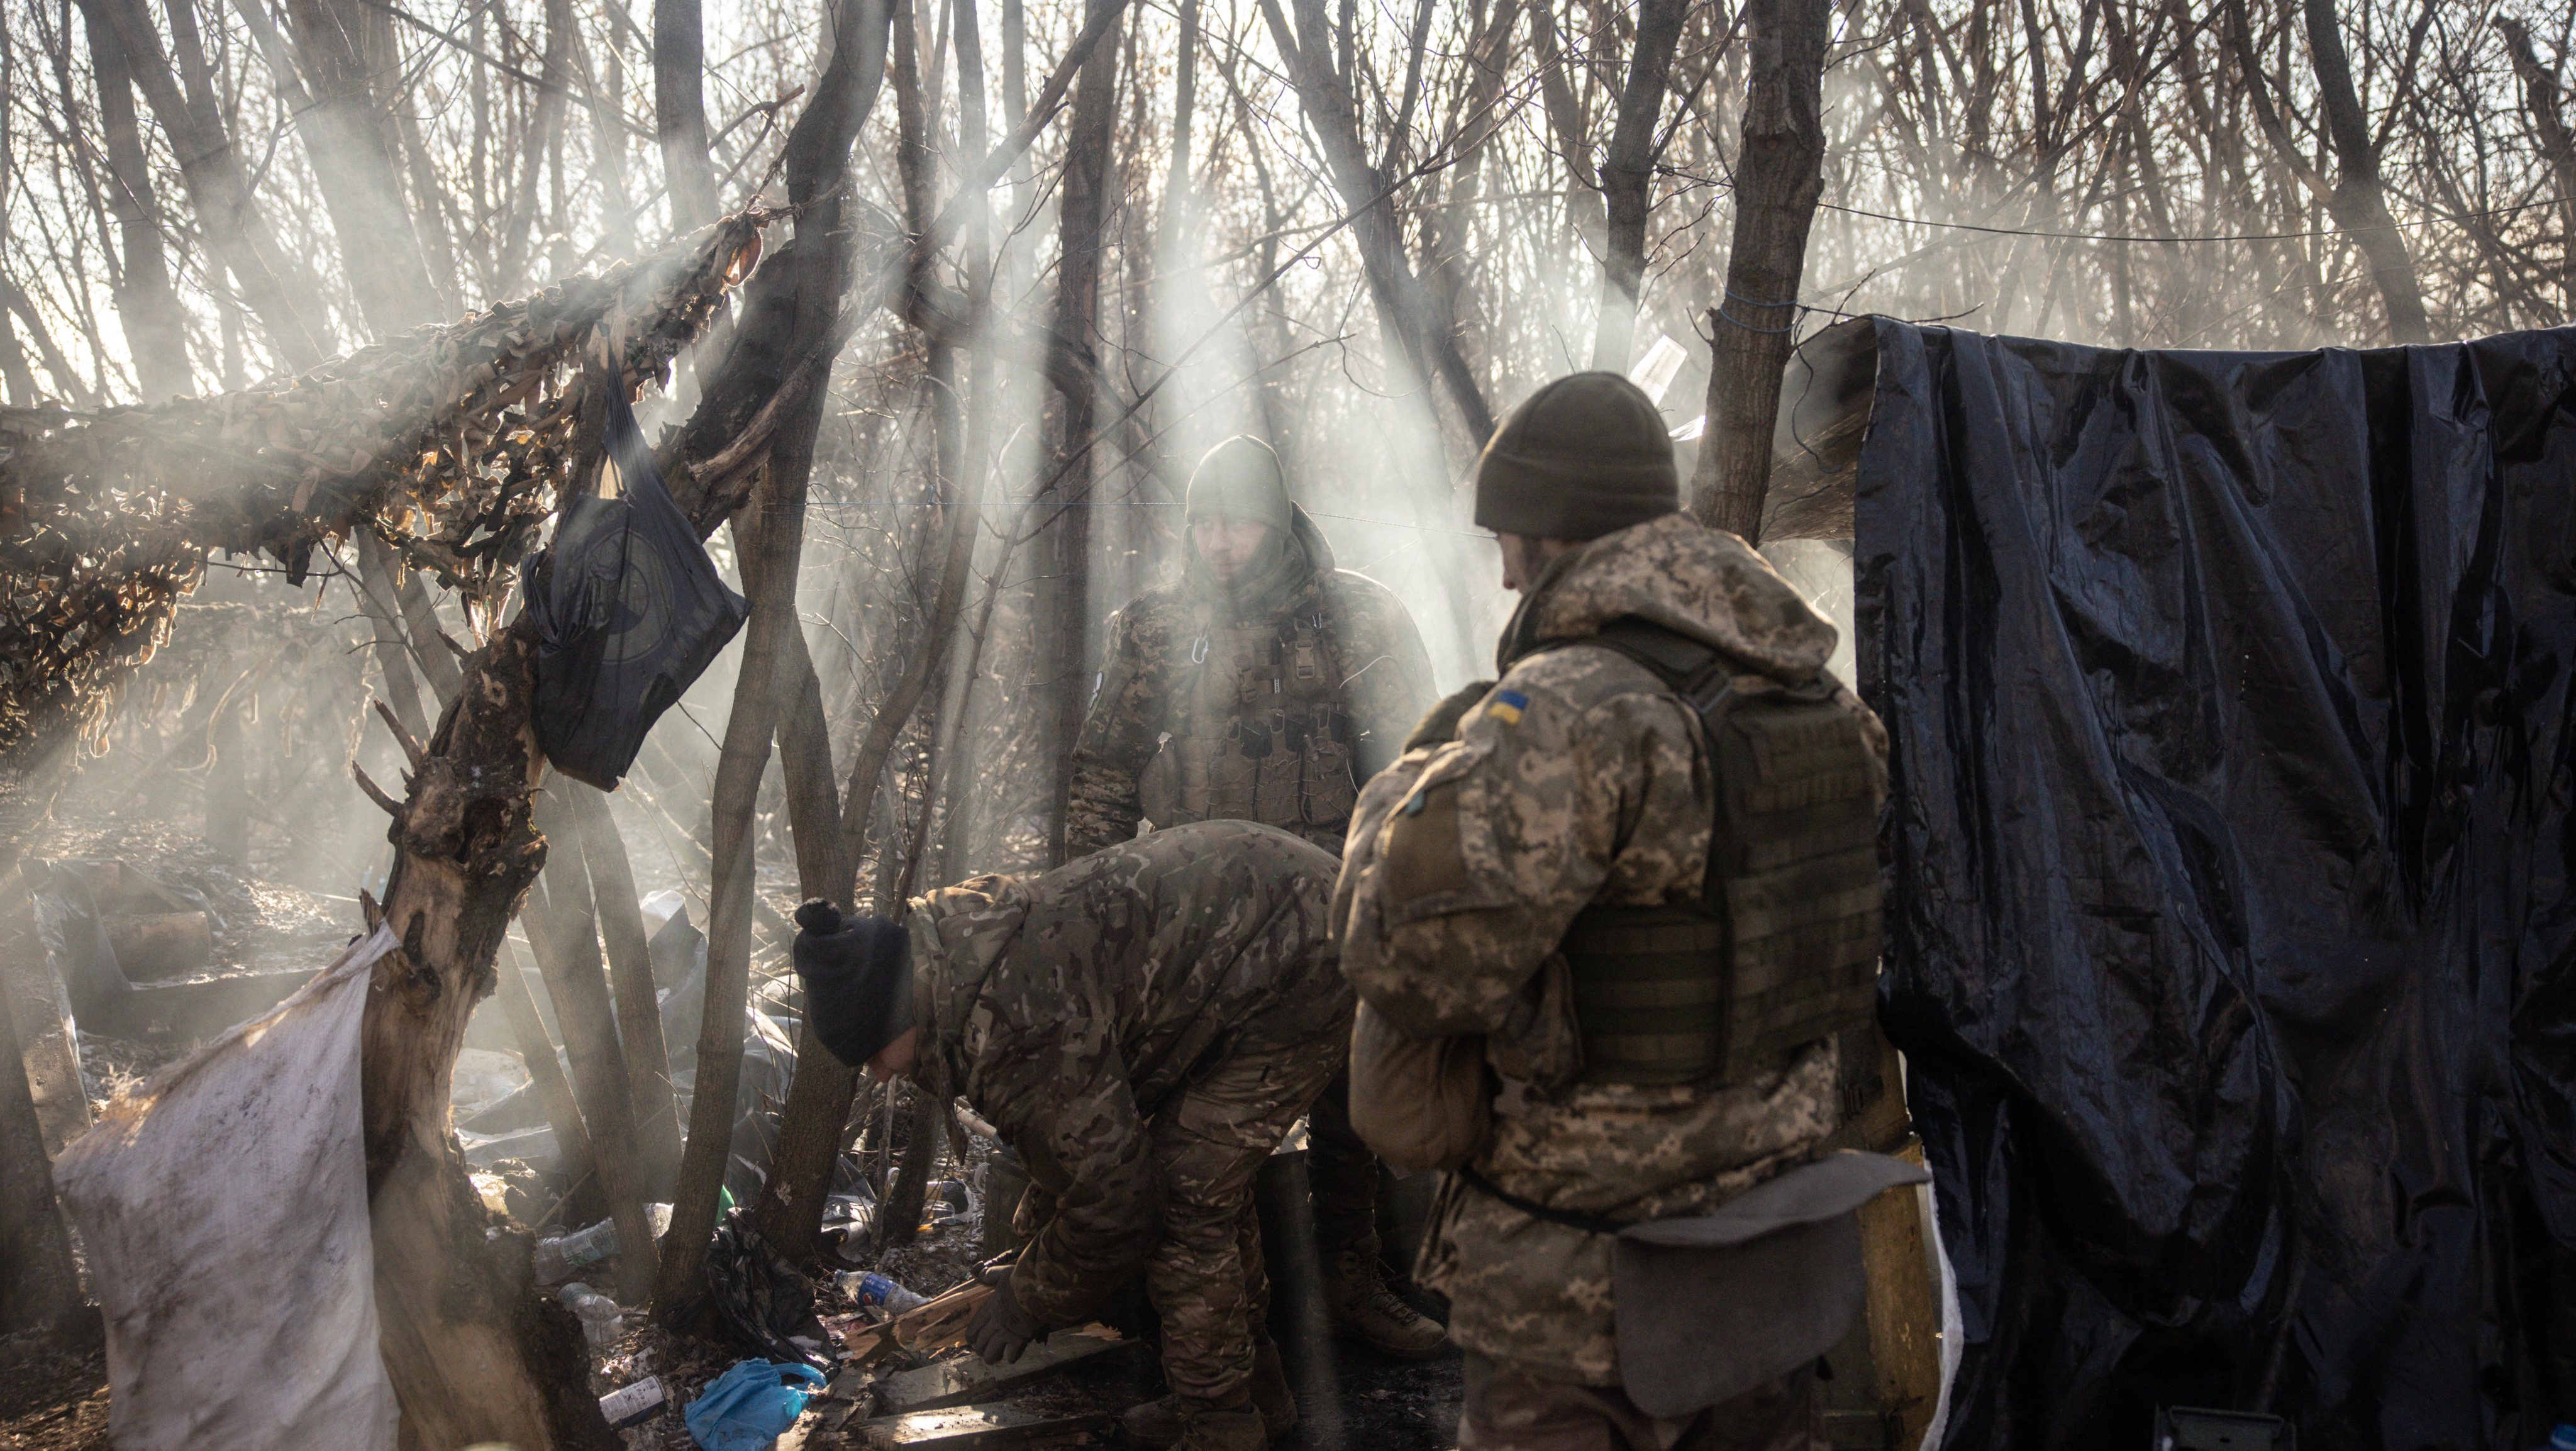 Ukraine And Russia Trade Fire In Donetsk Region